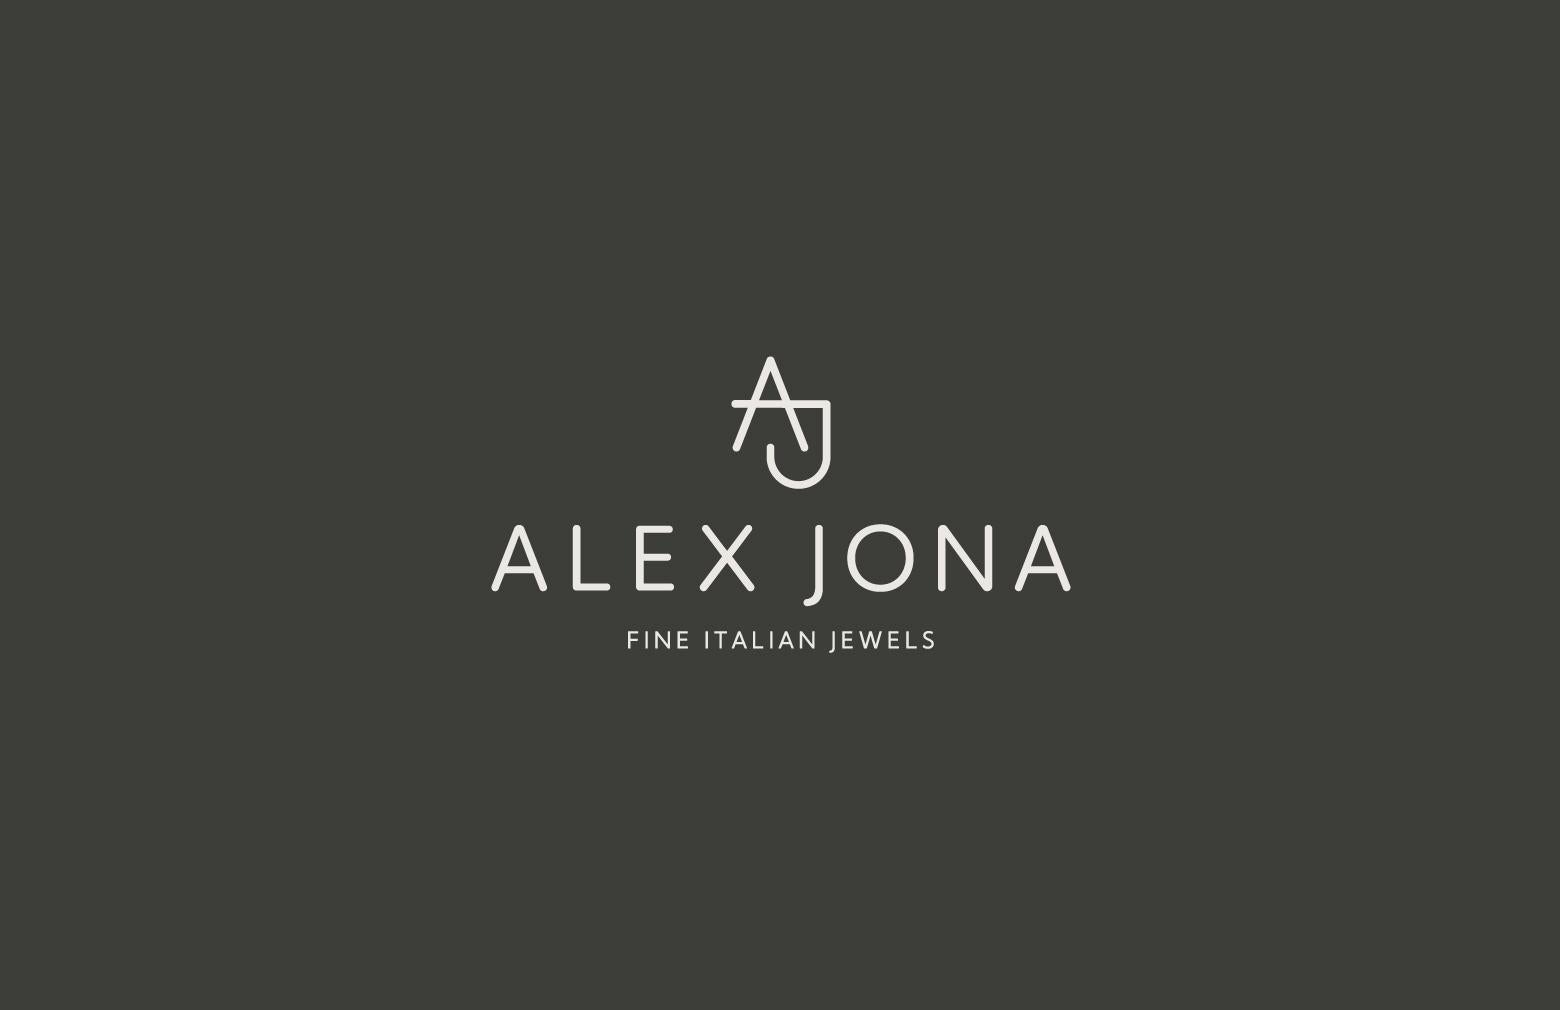 Alex Jona Gold-Plated Sterling Silver Cage Bangle Bracelet For Sale 6